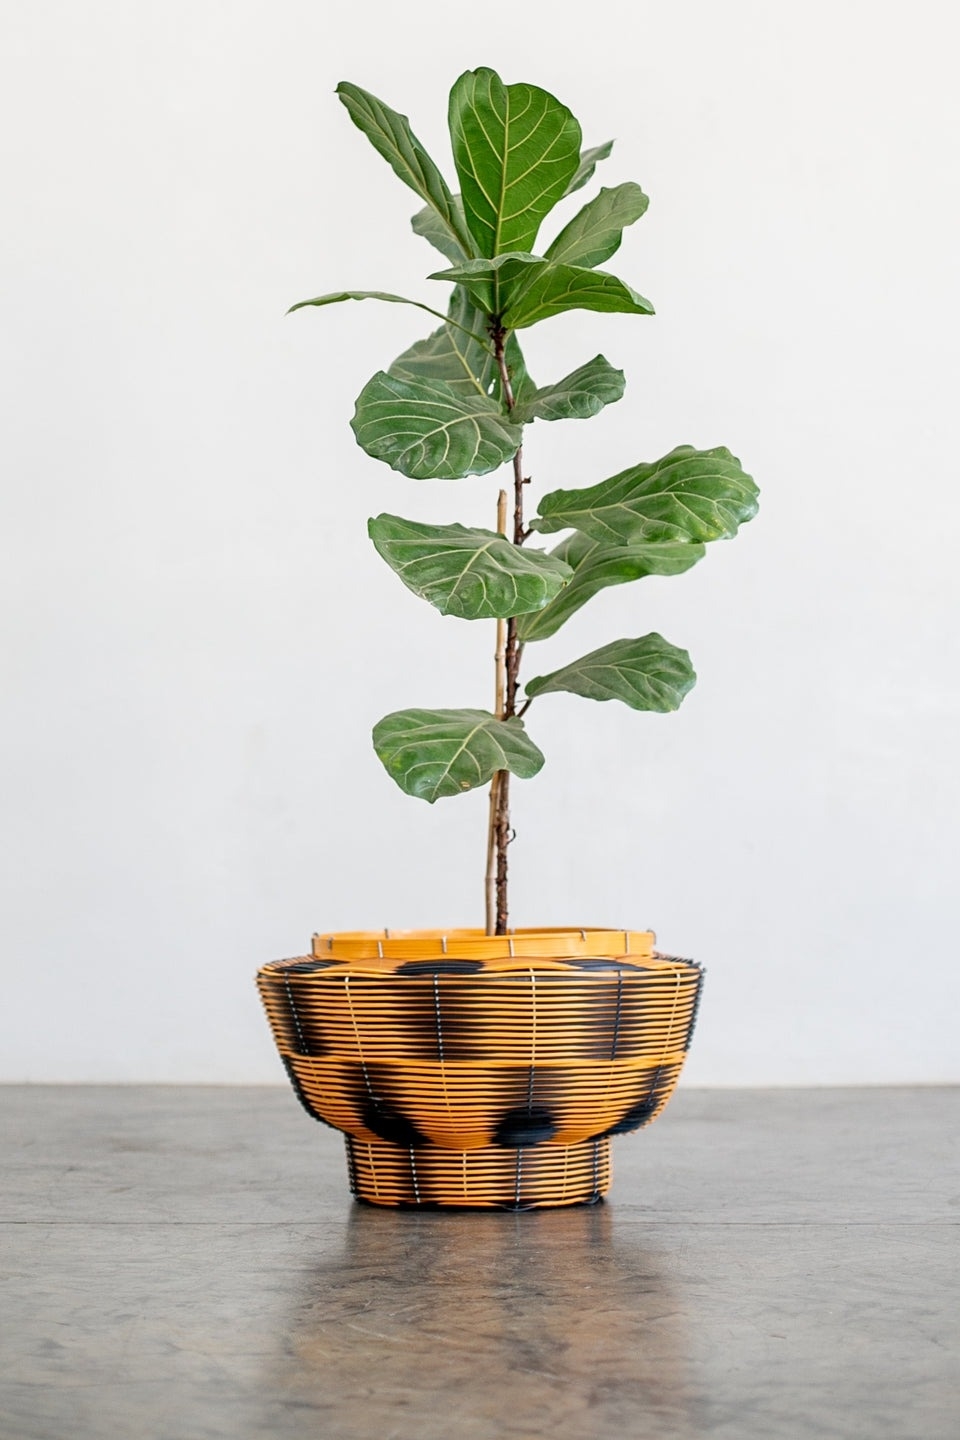 Fiddle leaf fig plant in a woven basket planter for interior decoration